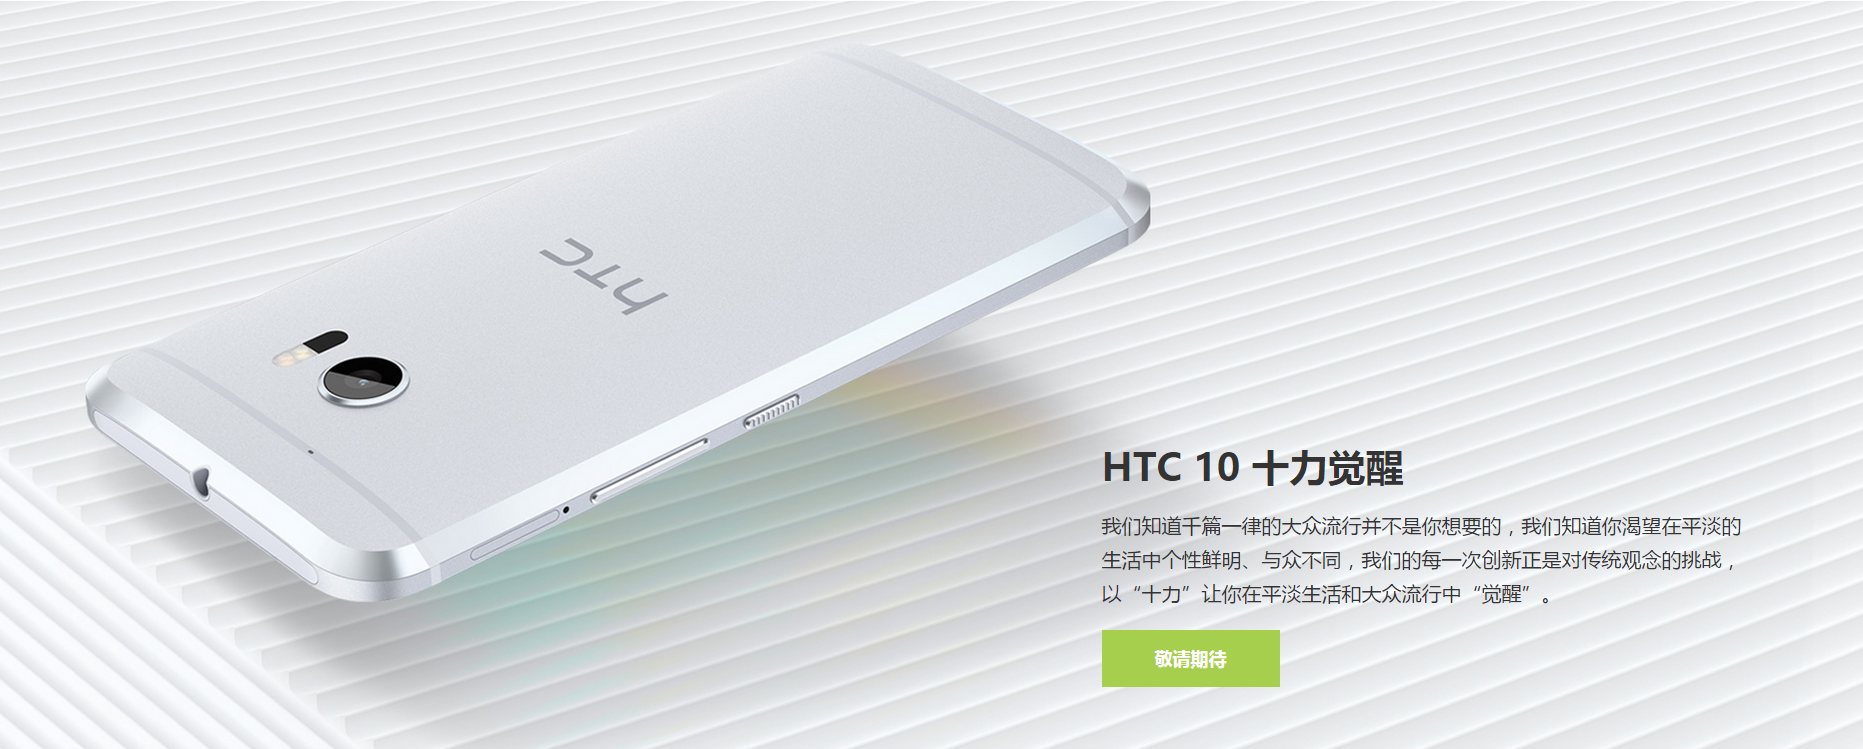 HTC 10现身中国官方网站 最近先发毋庸置疑的